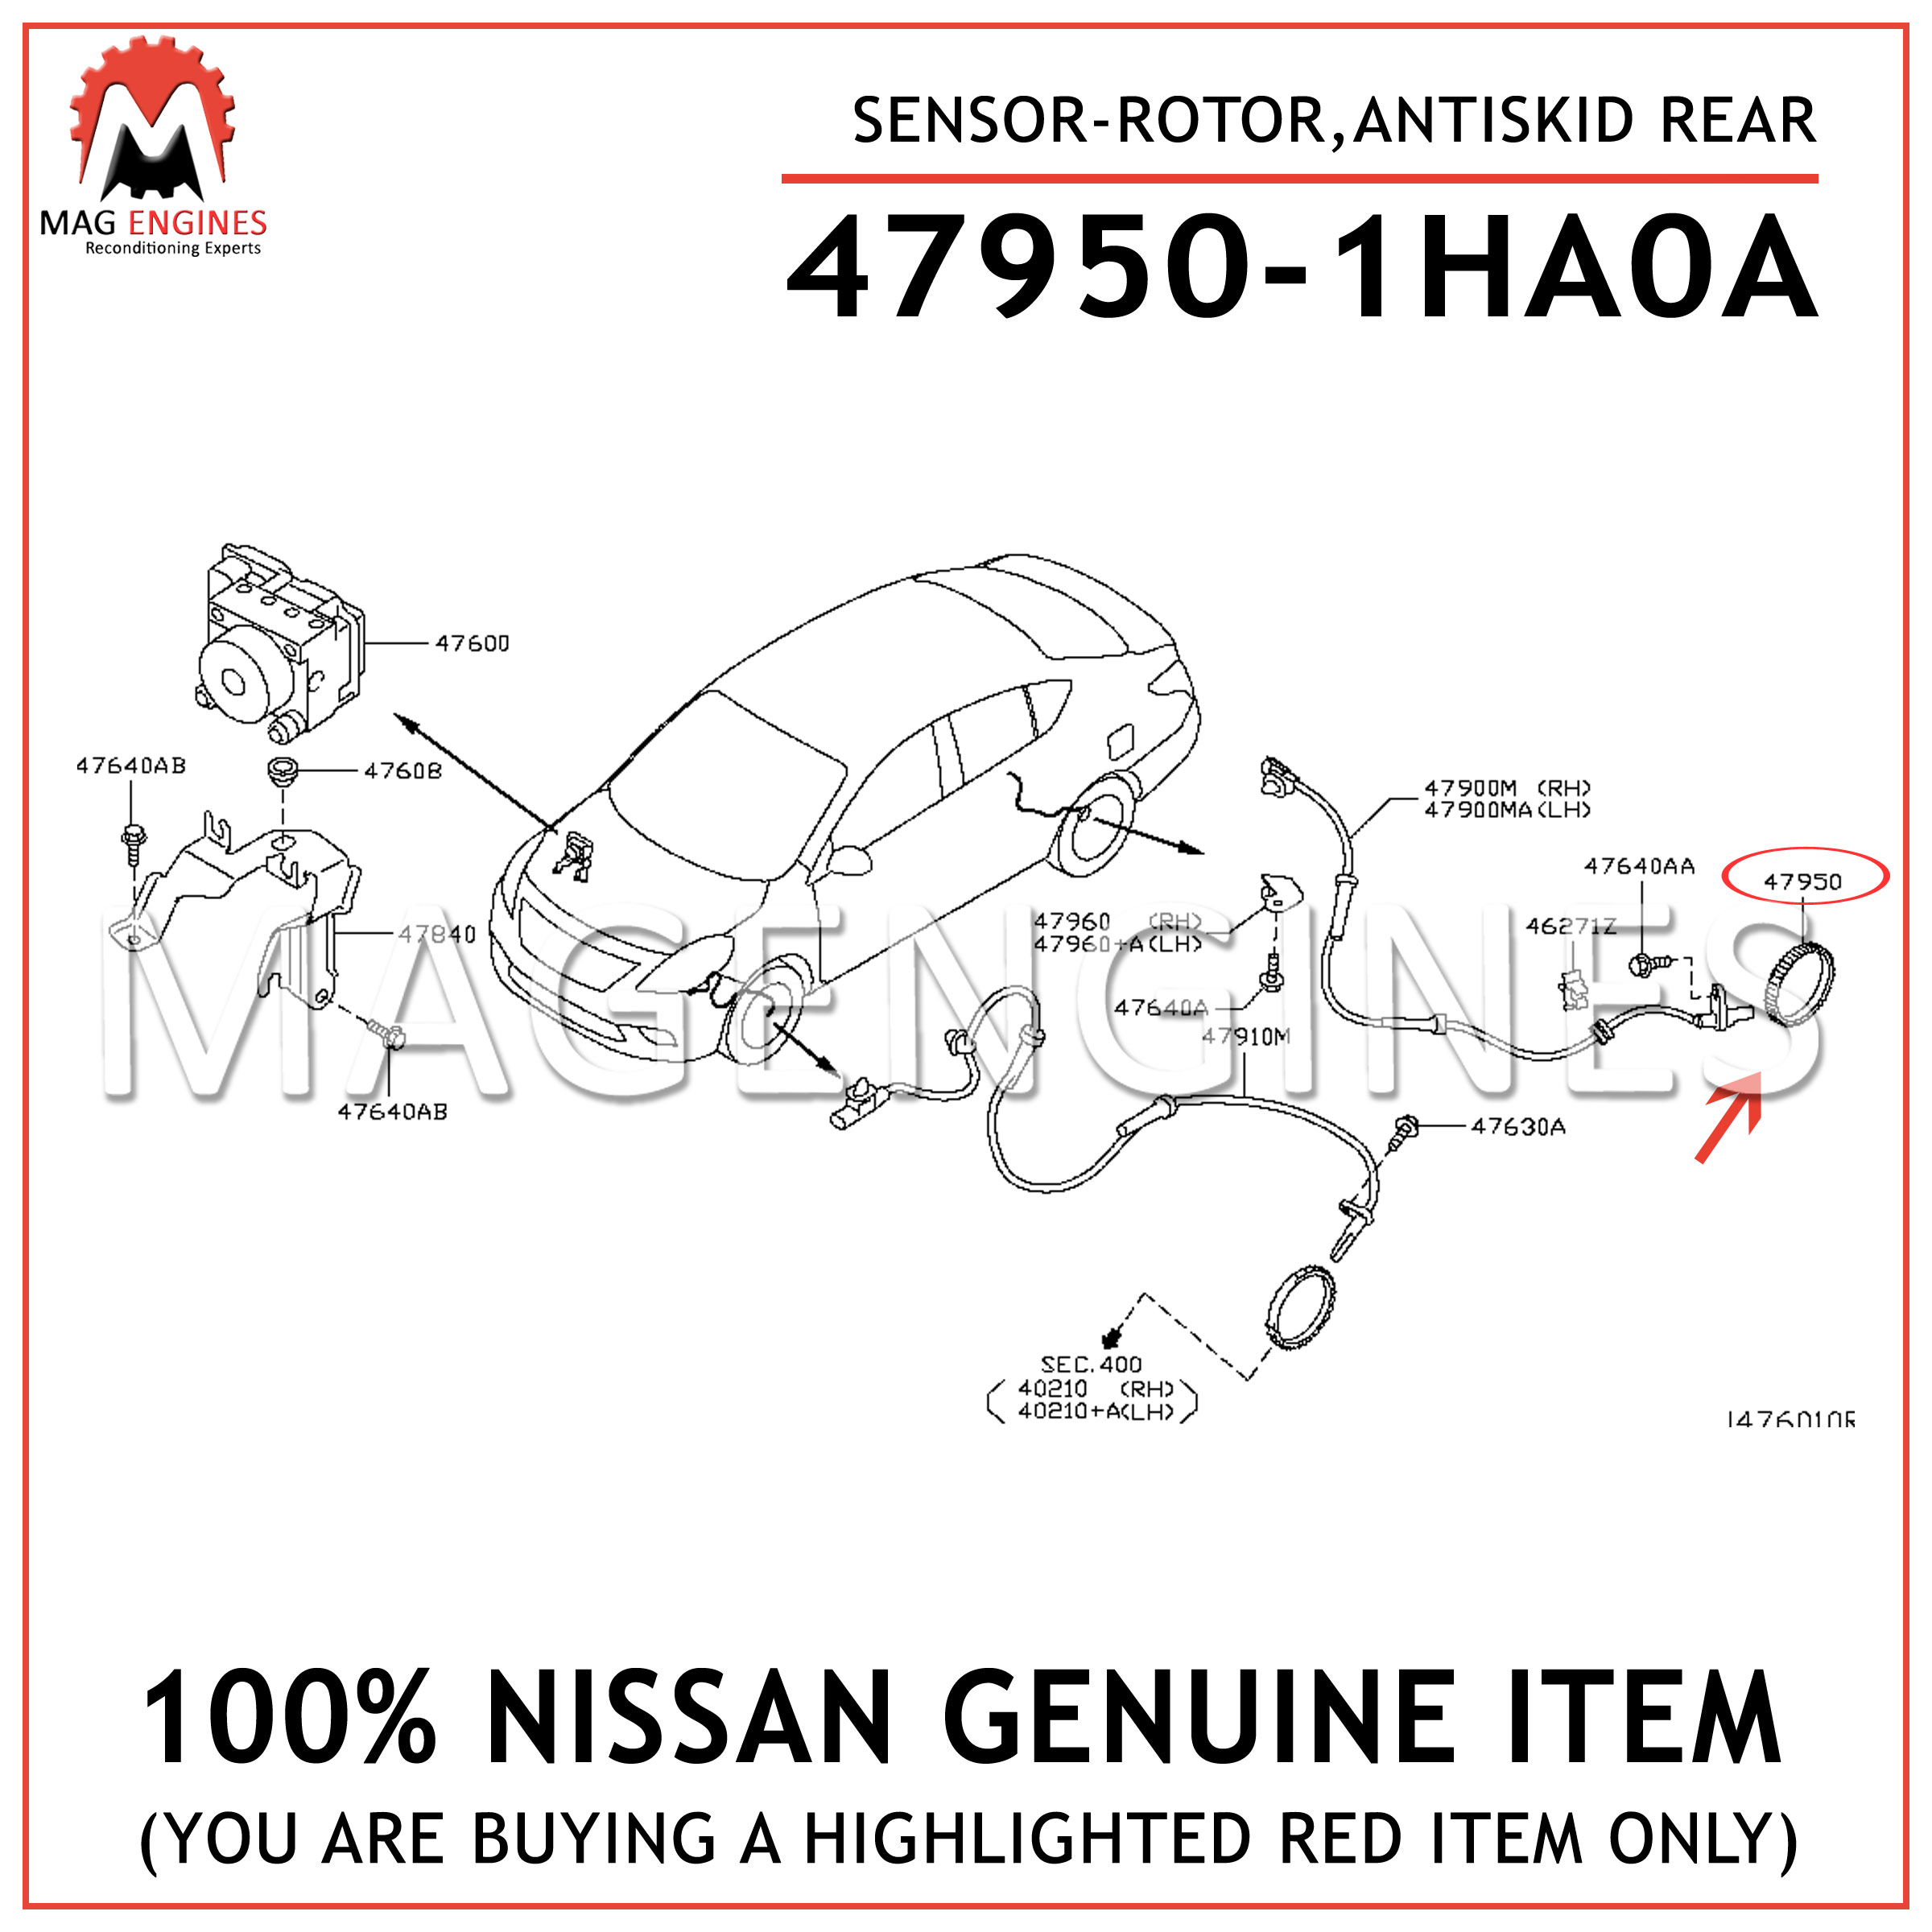 1ha0a Nissan Genuine Sensor Rotor Antiskid Rear ha0a Mag Engines